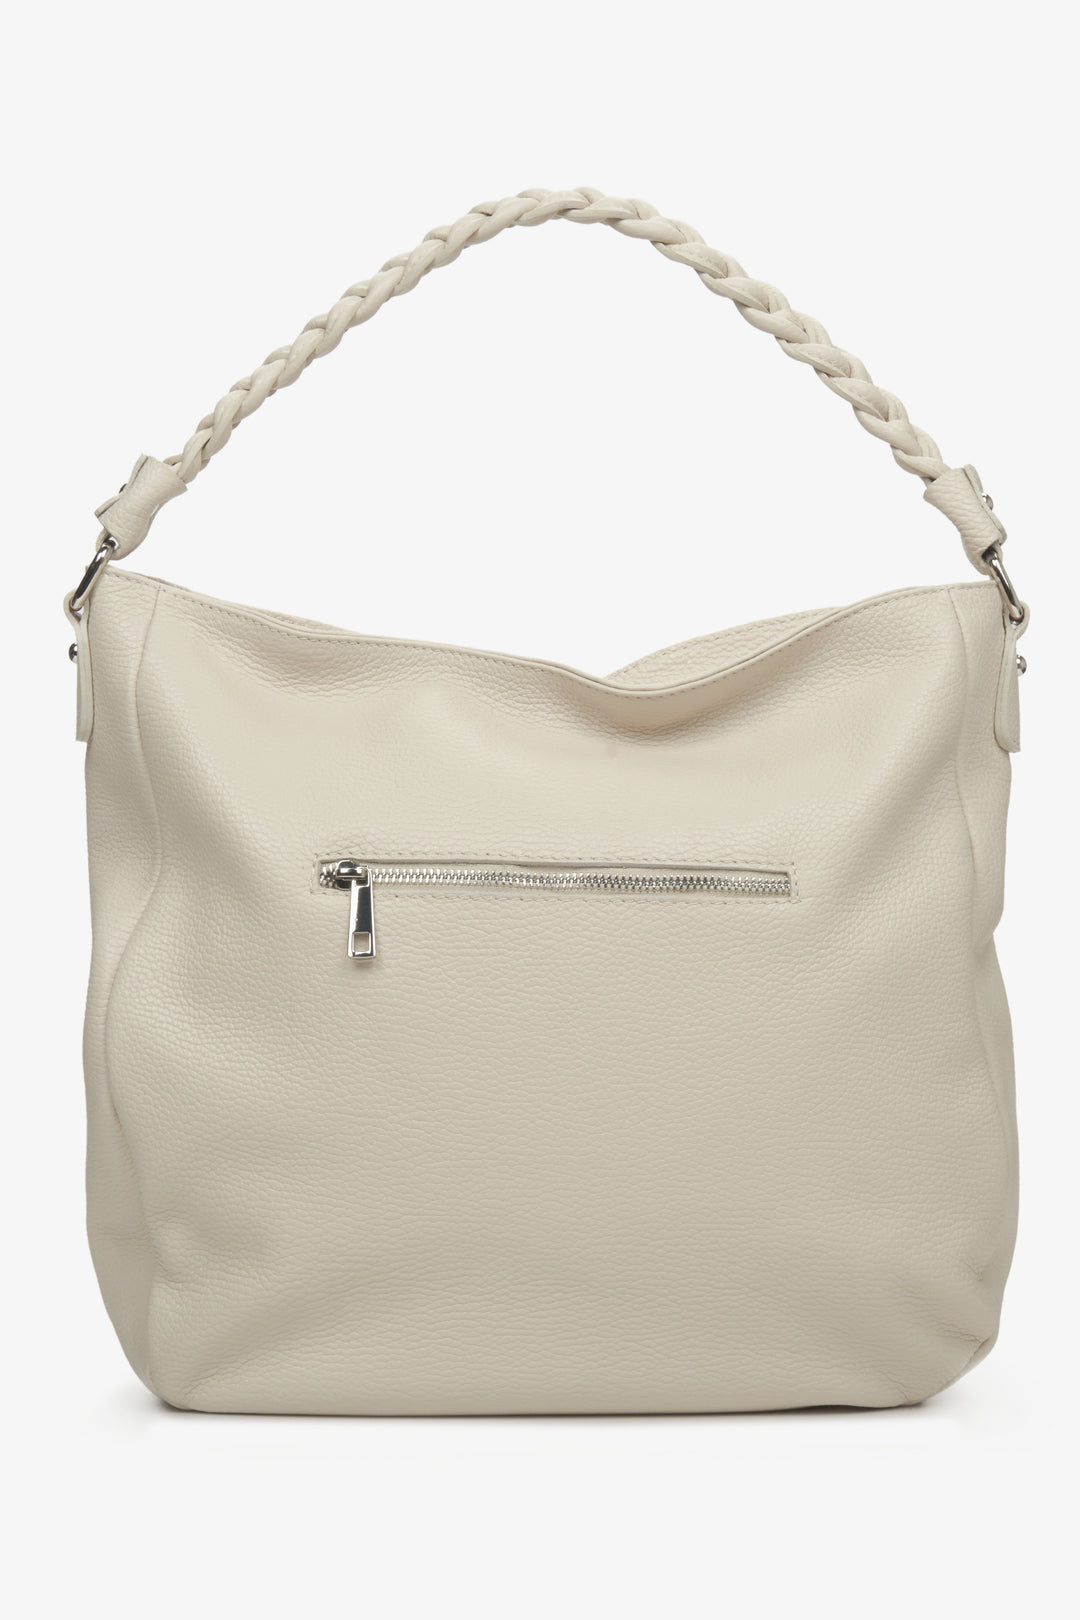 Women's light beige leather handbag of big size - reverse.